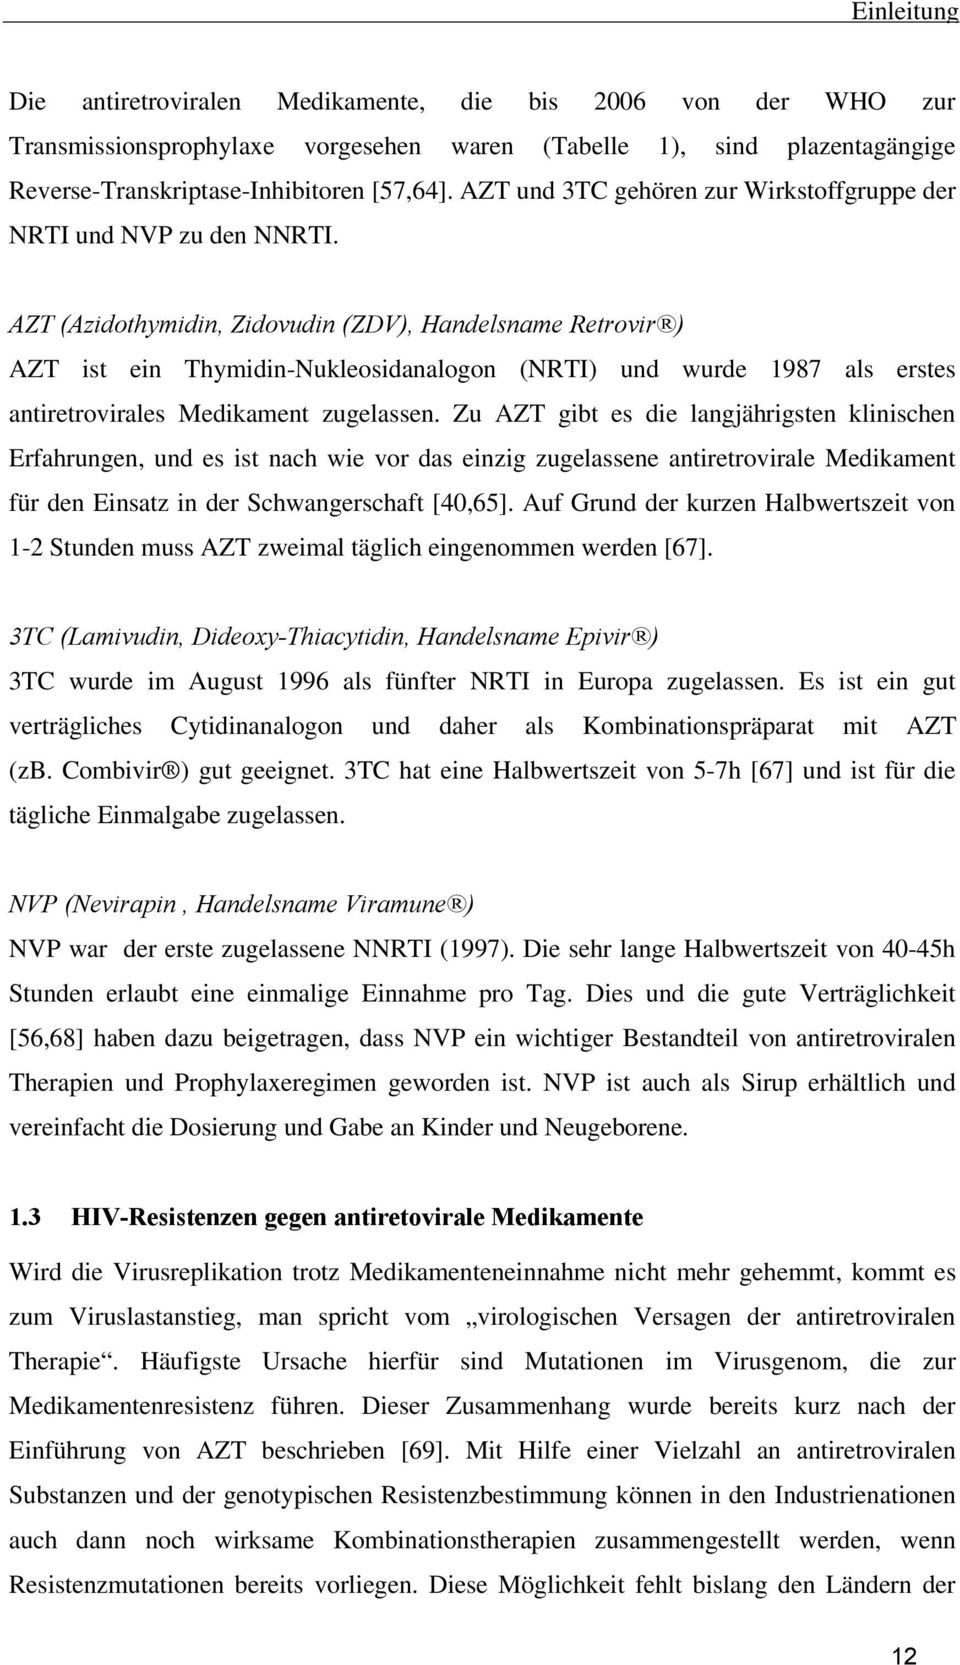 AZT (Azidothymidin, Zidovudin (ZDV), Handelsname Retrovir ) AZT ist ein Thymidin-Nukleosidanalogon (NRTI) und wurde 1987 als erstes antiretrovirales Medikament zugelassen.